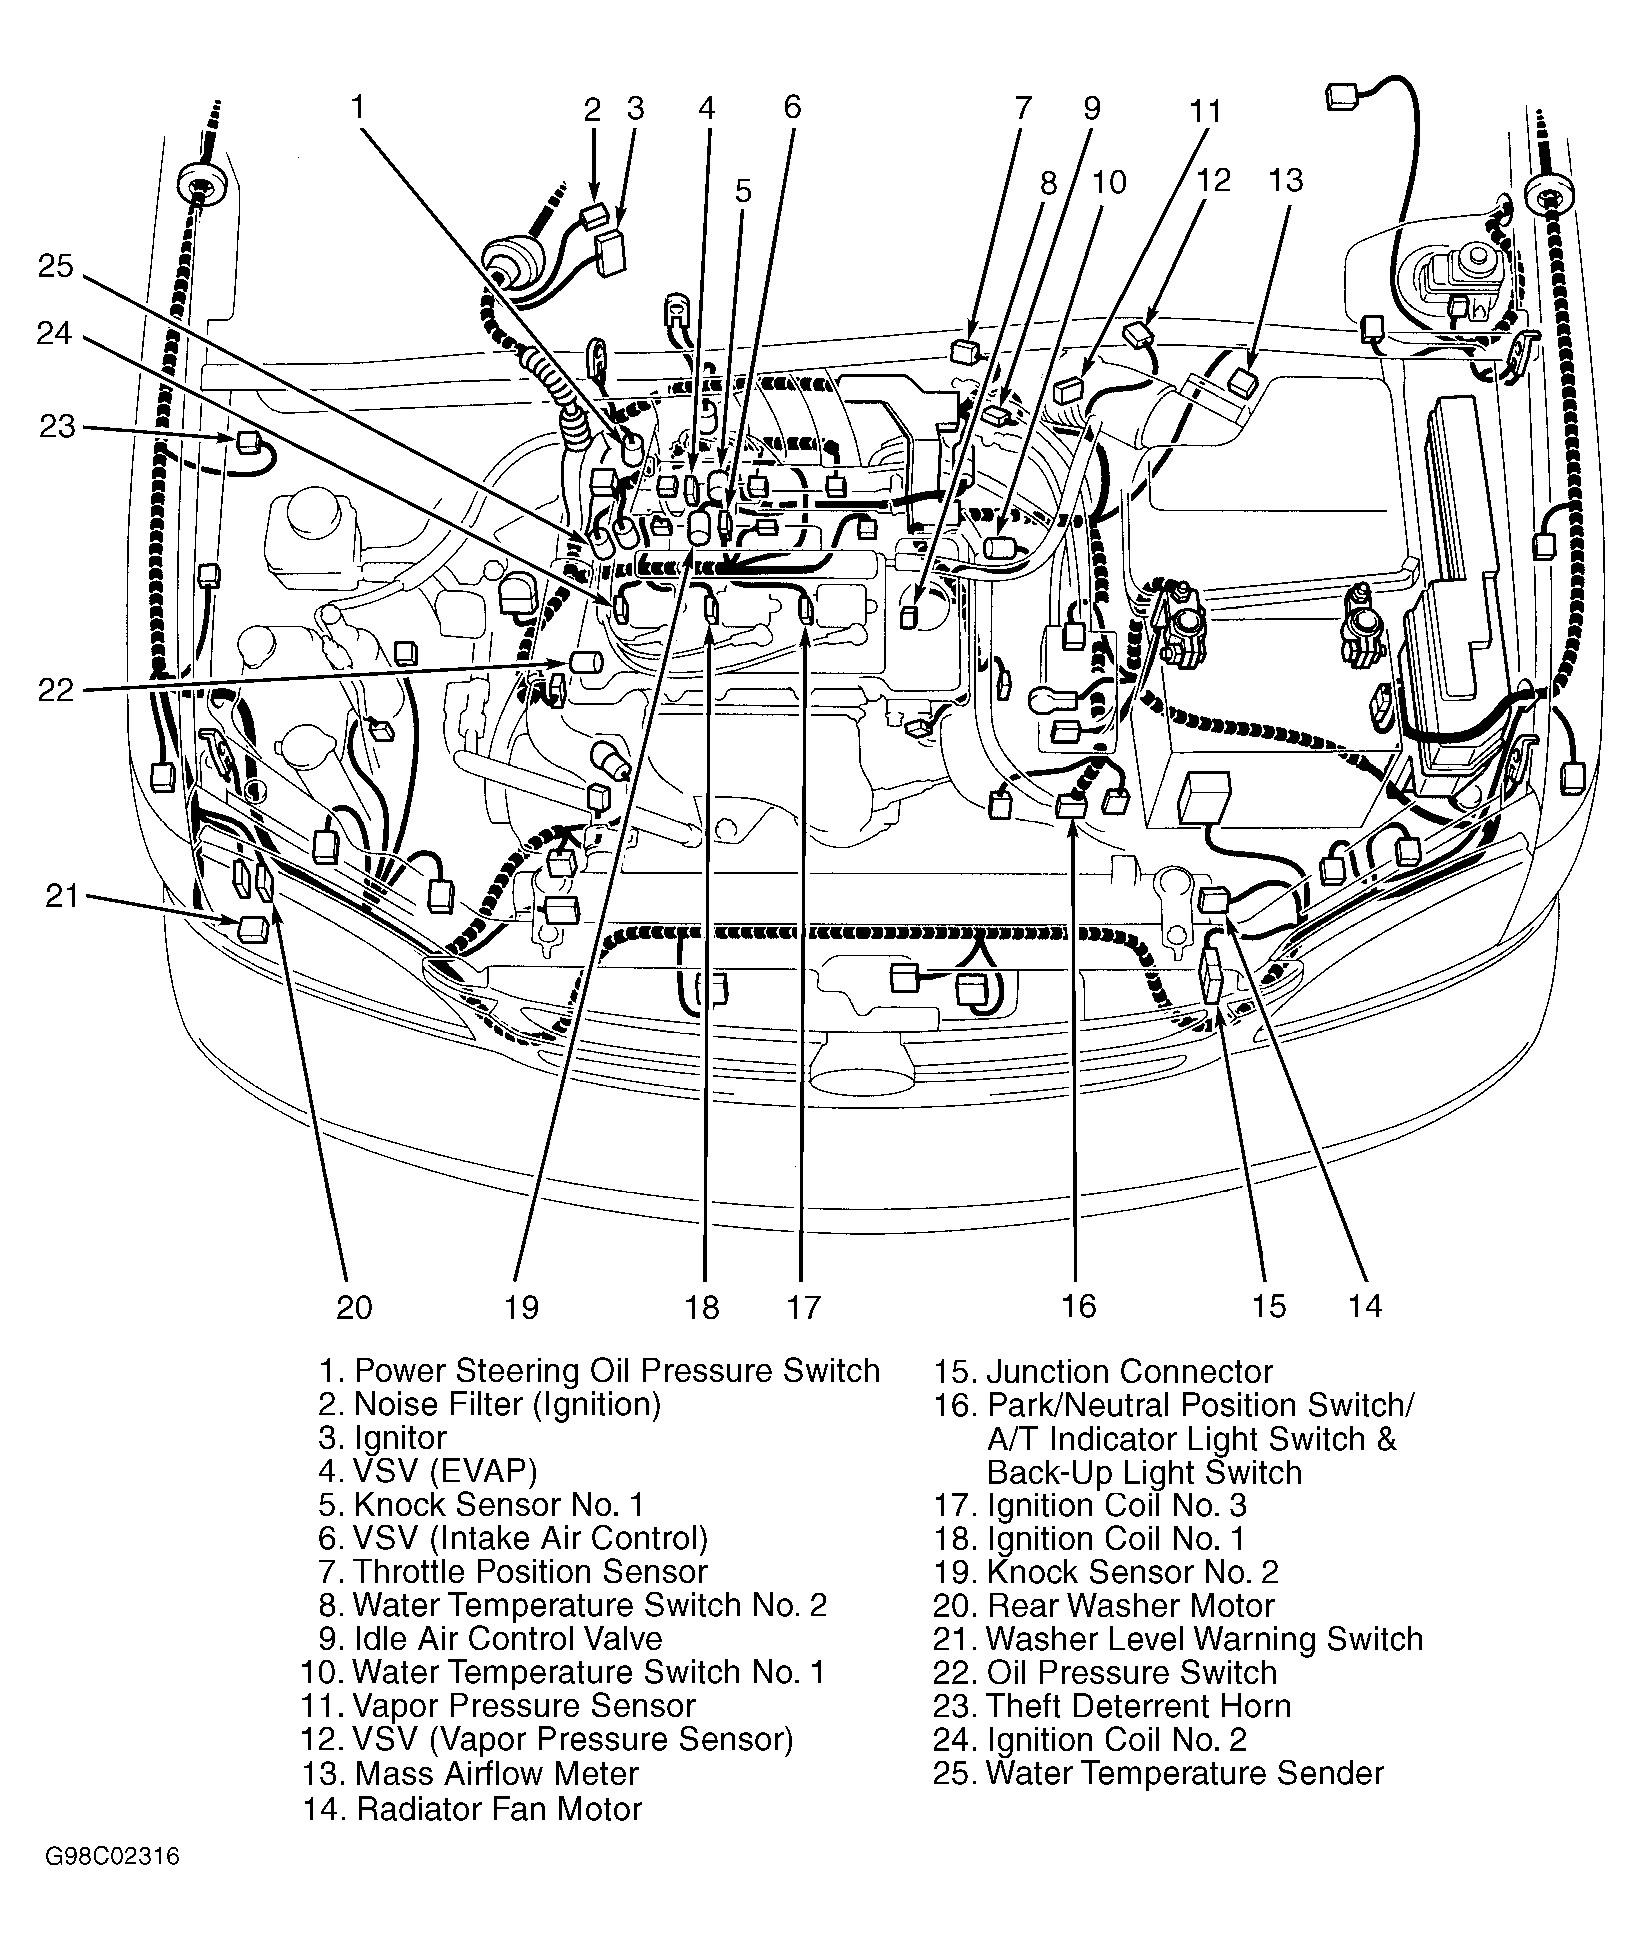 Toyota Celica Engine Diagram 2002 toyota Tundra Engine Diagram Wiring Diagram New Of Toyota Celica Engine Diagram